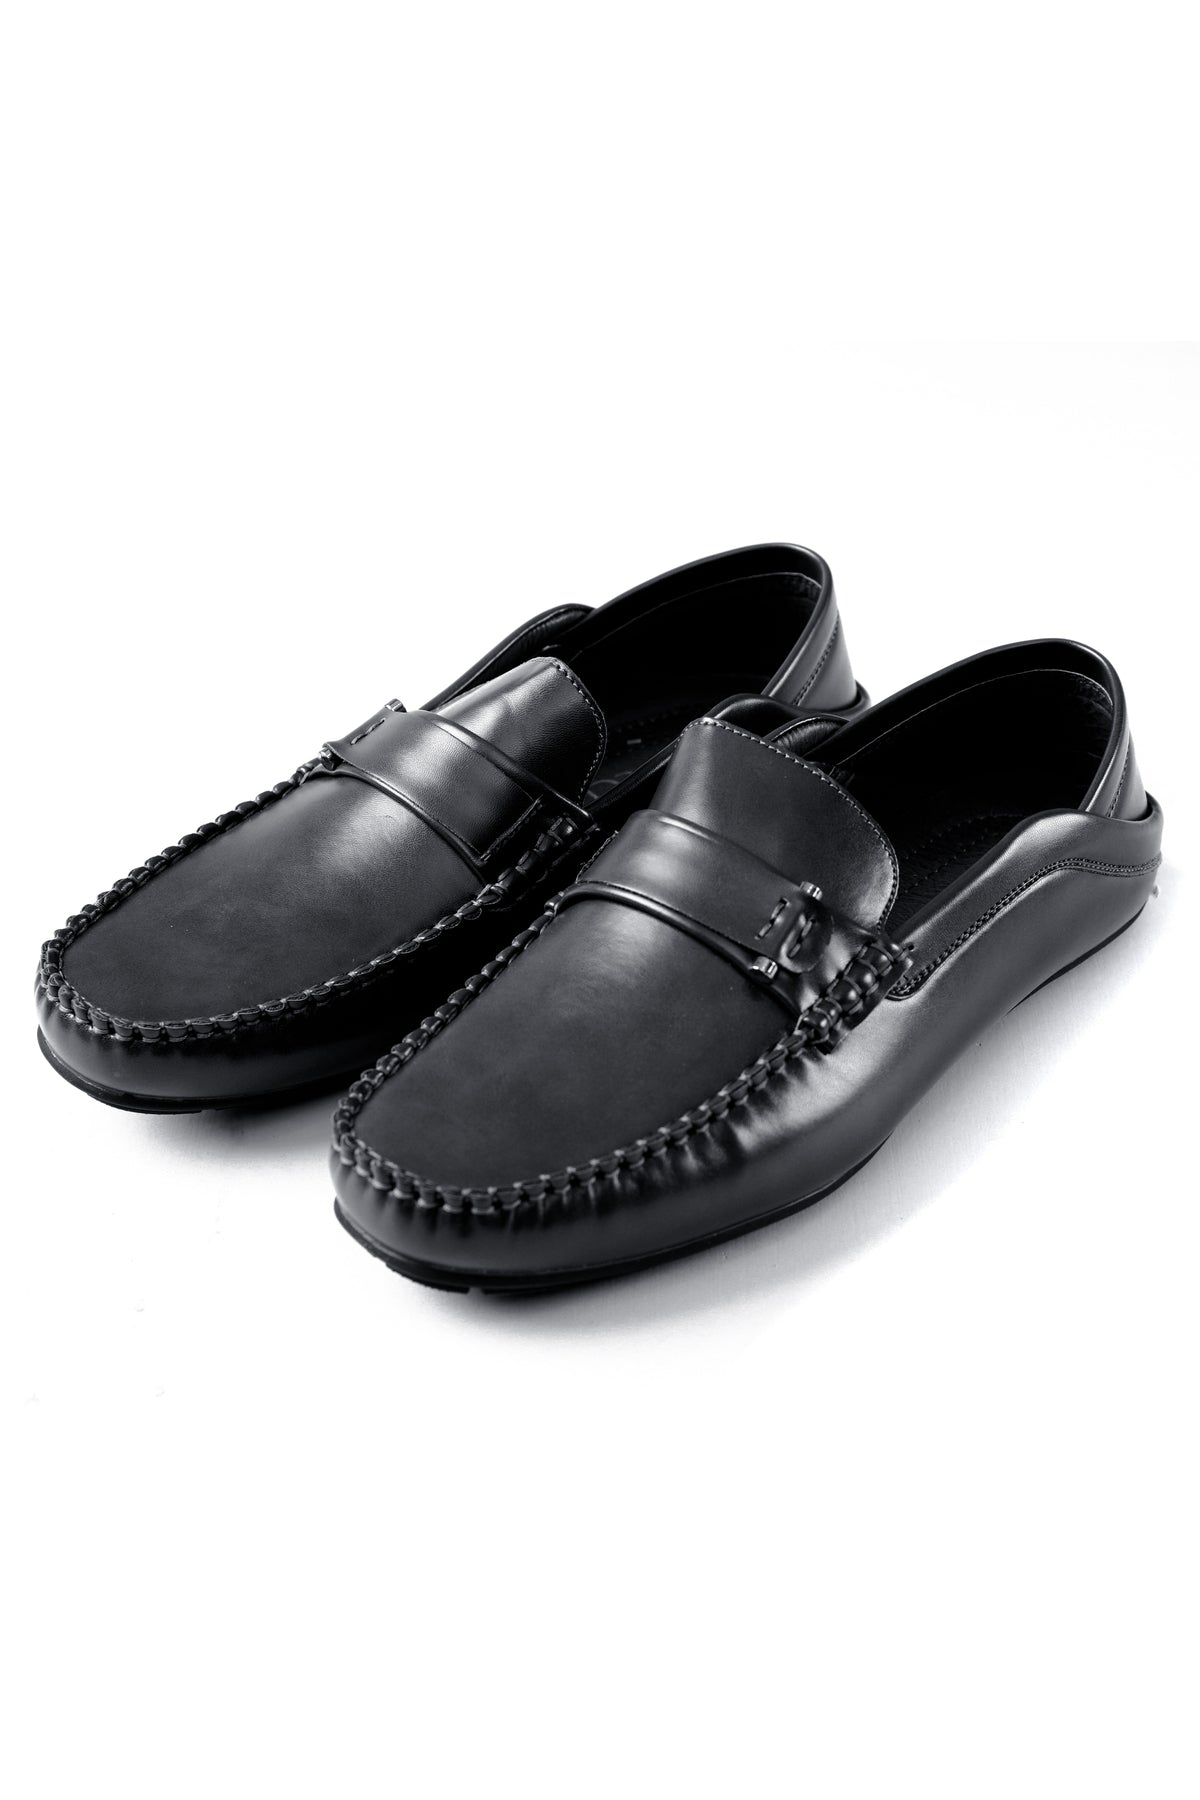 DeRucci Mens Casual Shoe